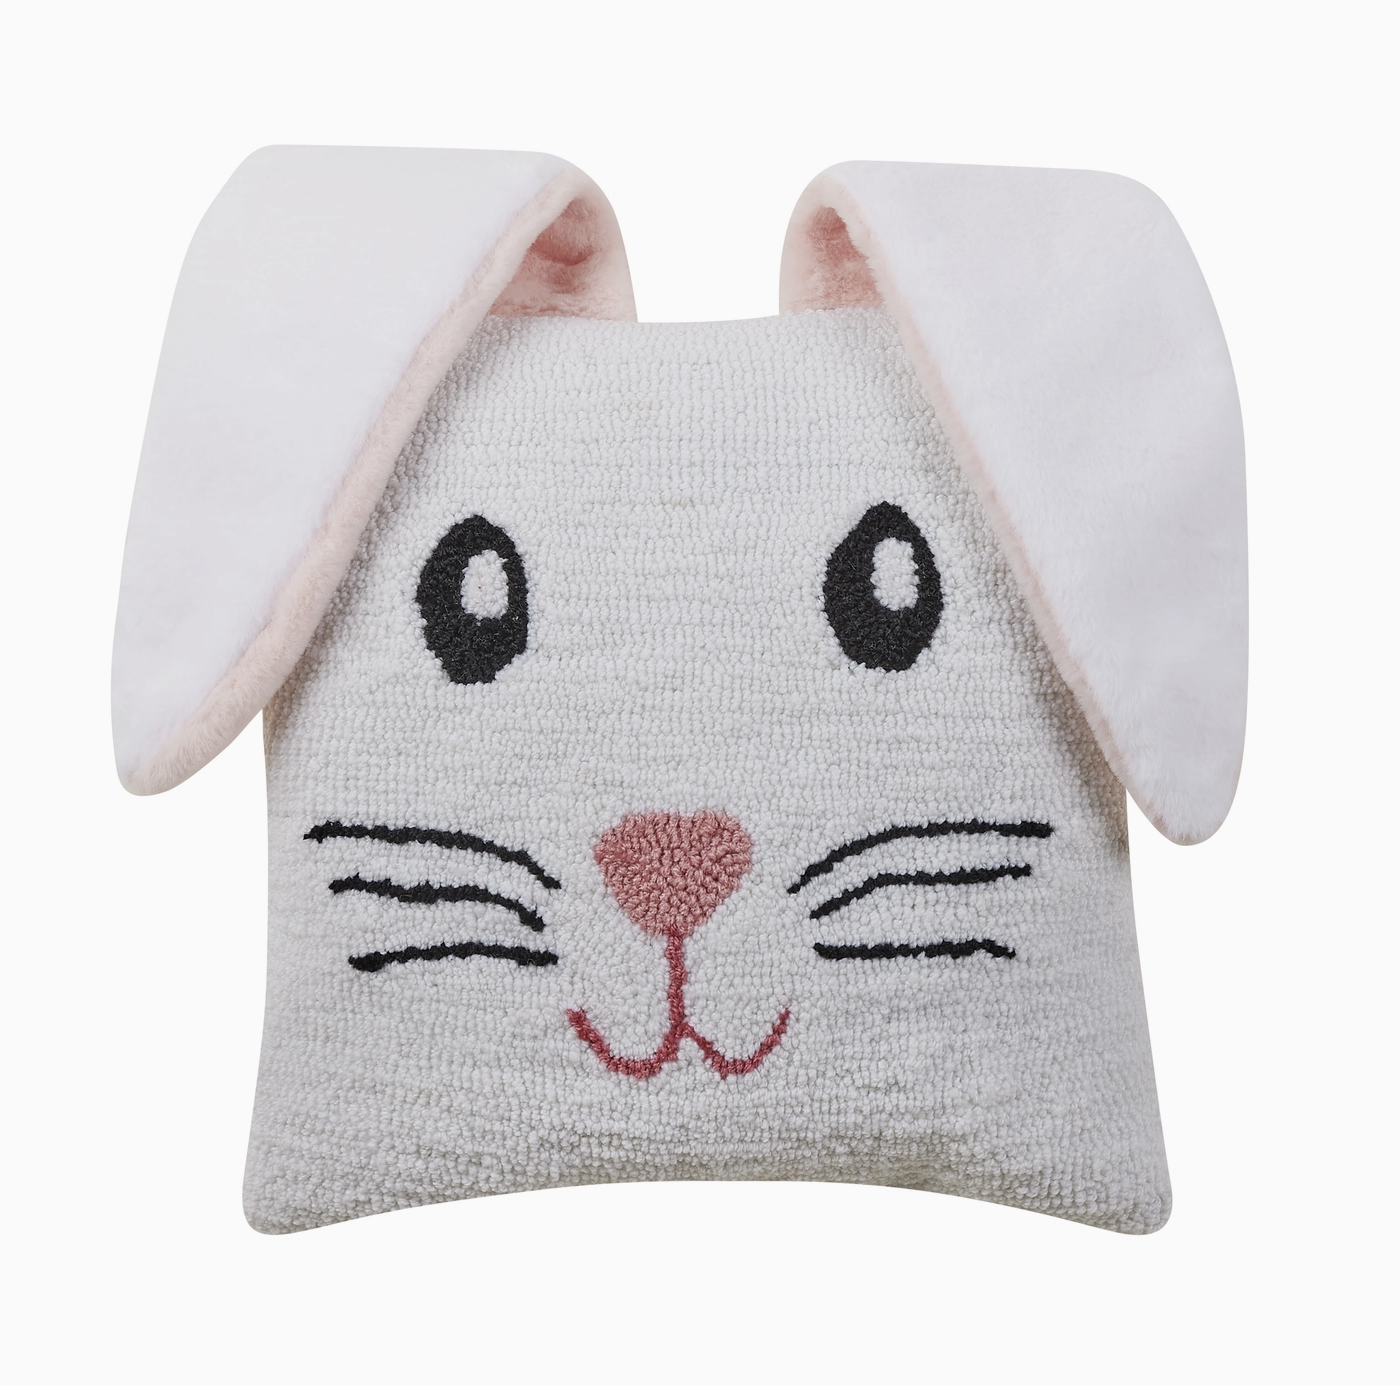 Bunny Ears Pillow